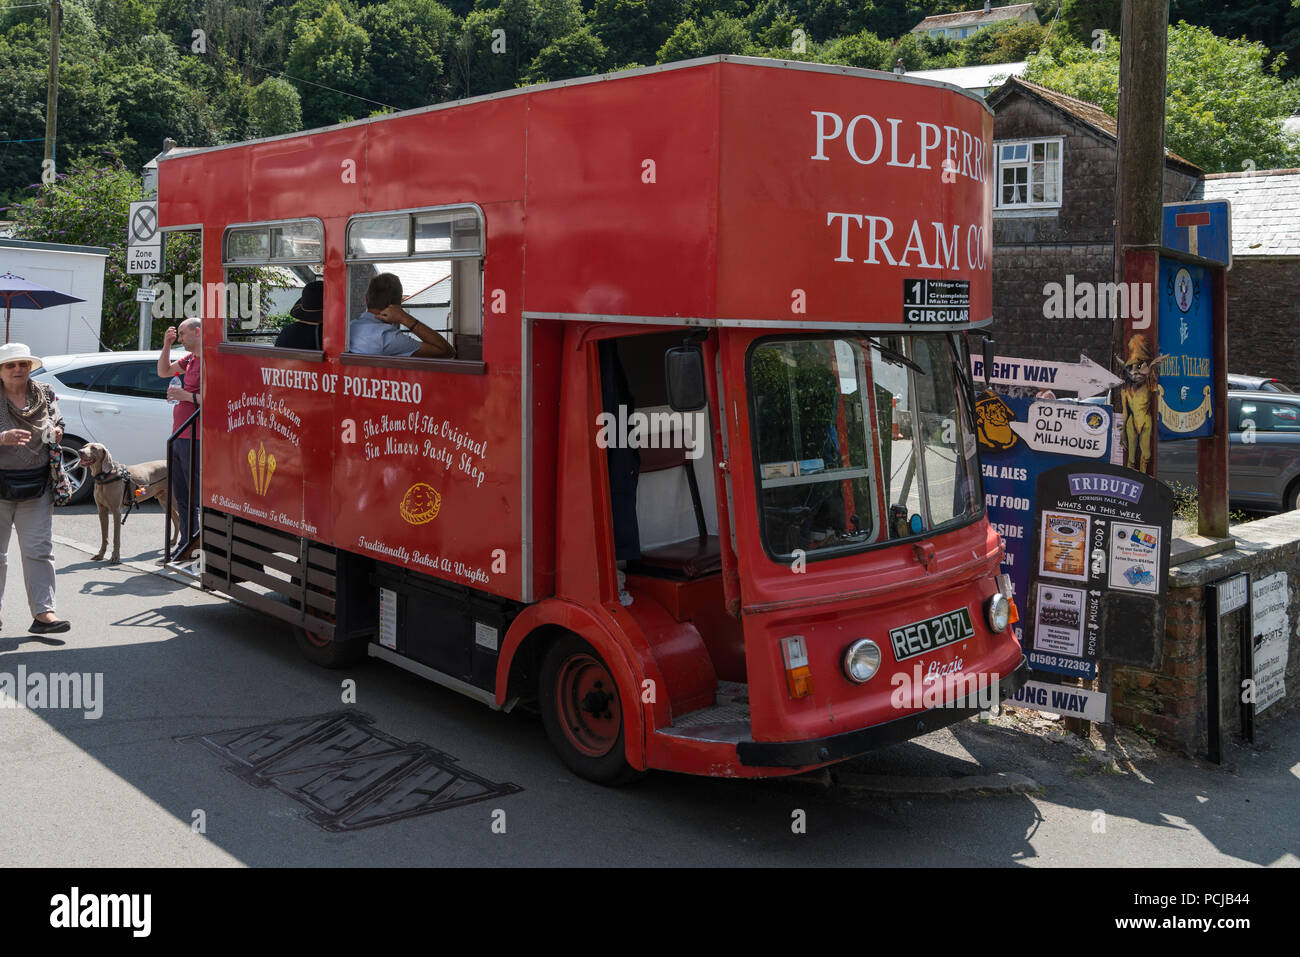 Polperro Tram Company electric tram, Polperro, Cornwall, England, UK Stock Photo